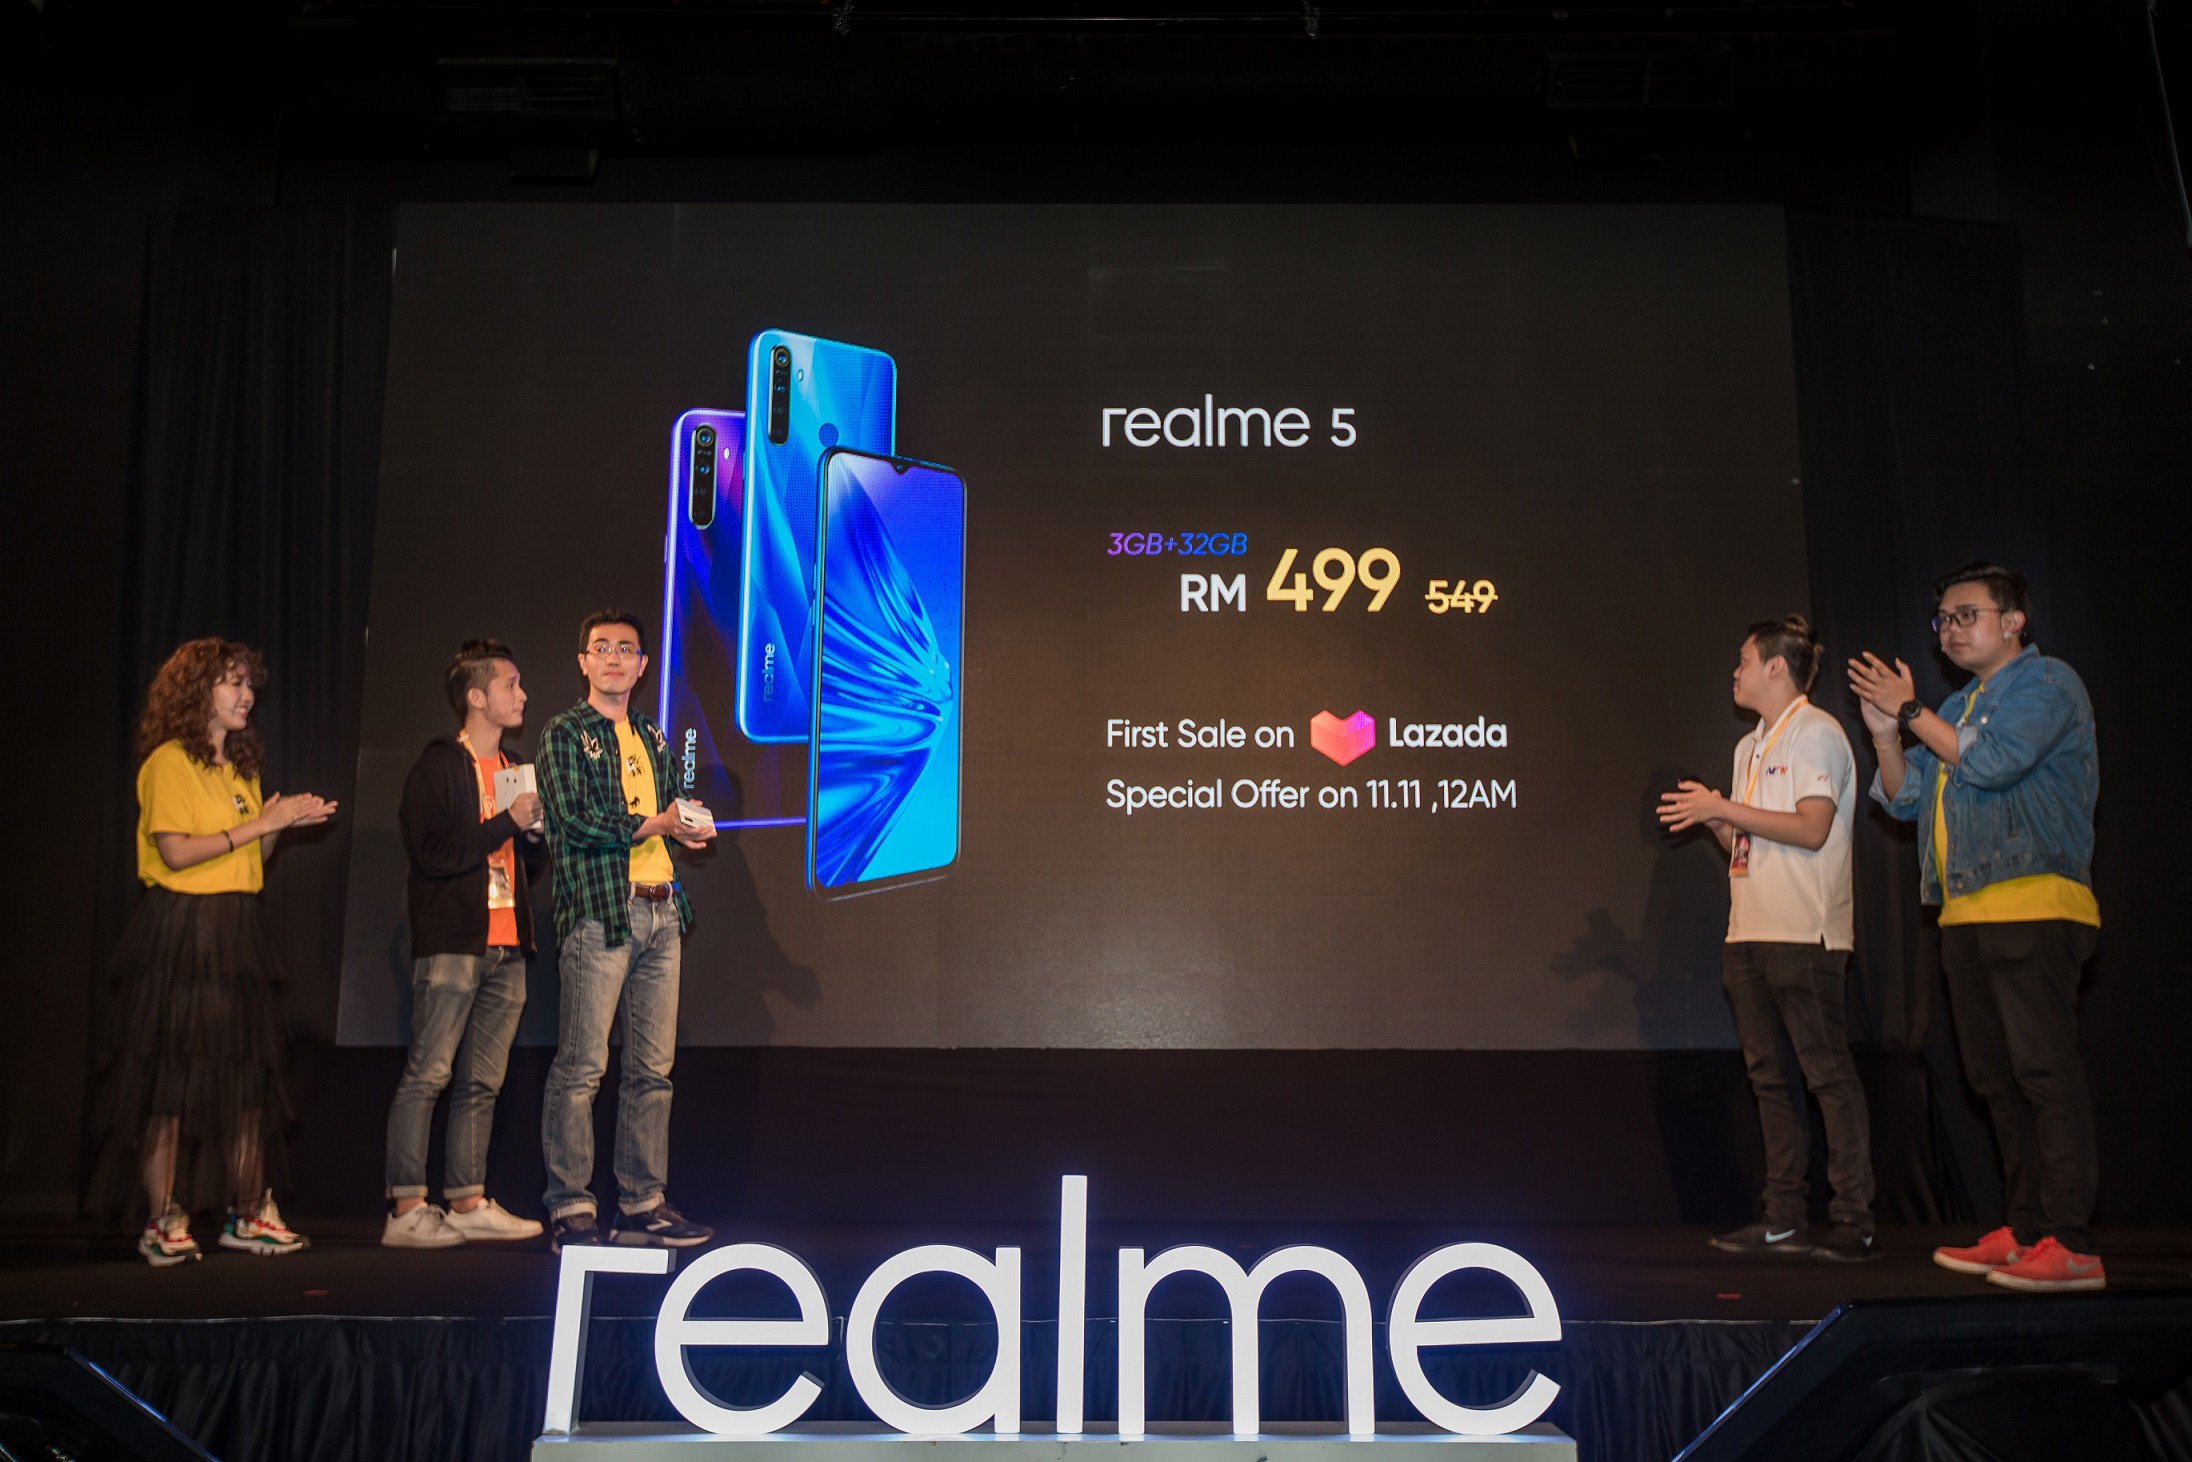 realme 5 First Sale